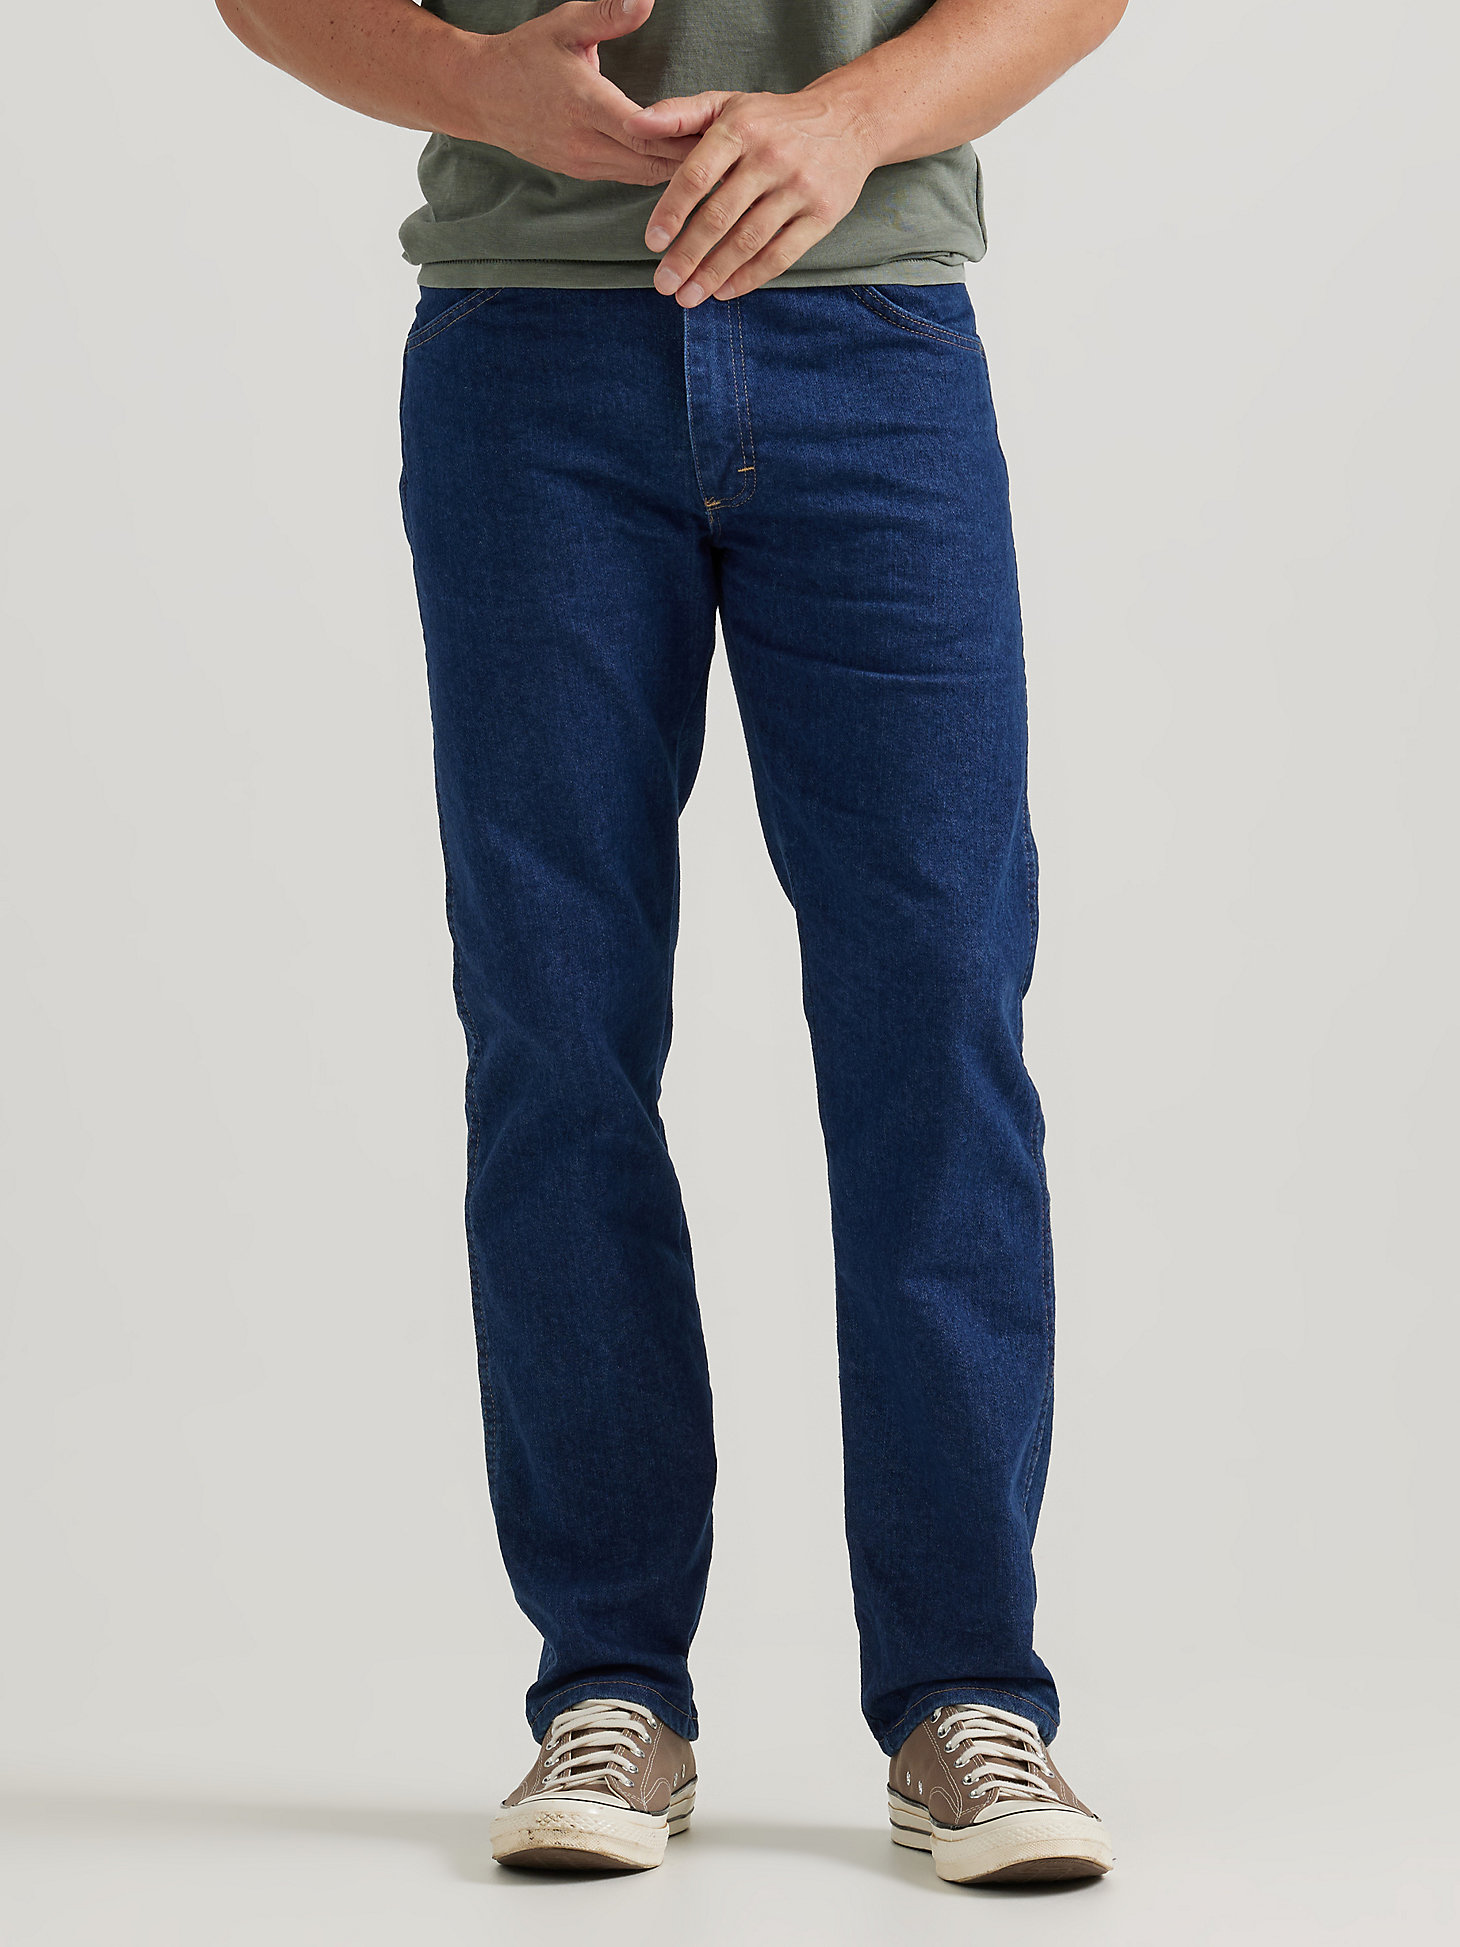 Mens Wrangler Larston tapered stretch slim fit jeans /'Indigo wit/' SECONDS WA16